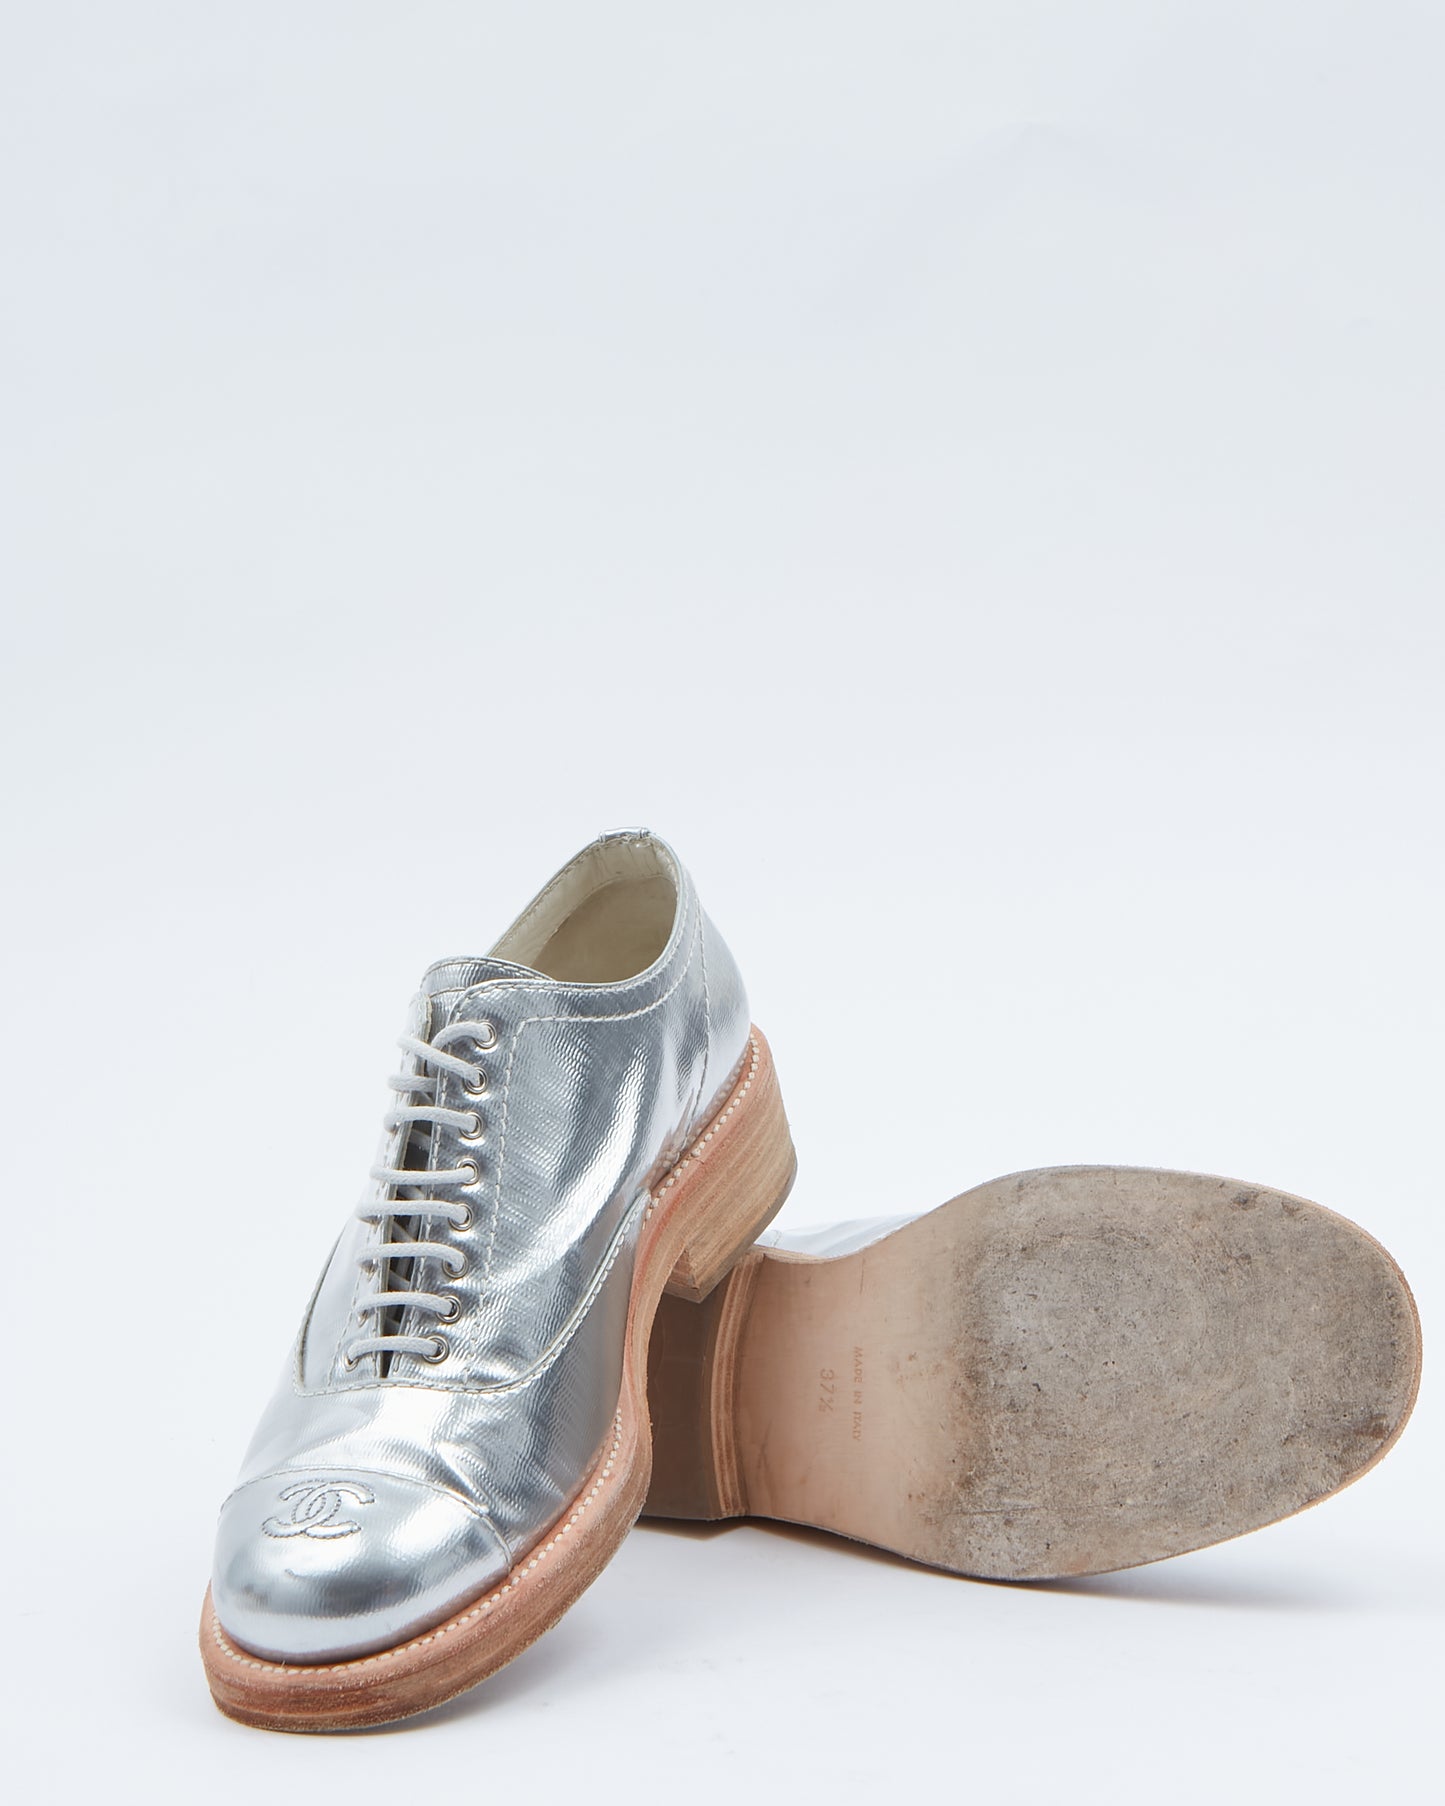 Chanel Silver Interlocking CC Logo Patent Leather Oxfords Shoe - 37.5